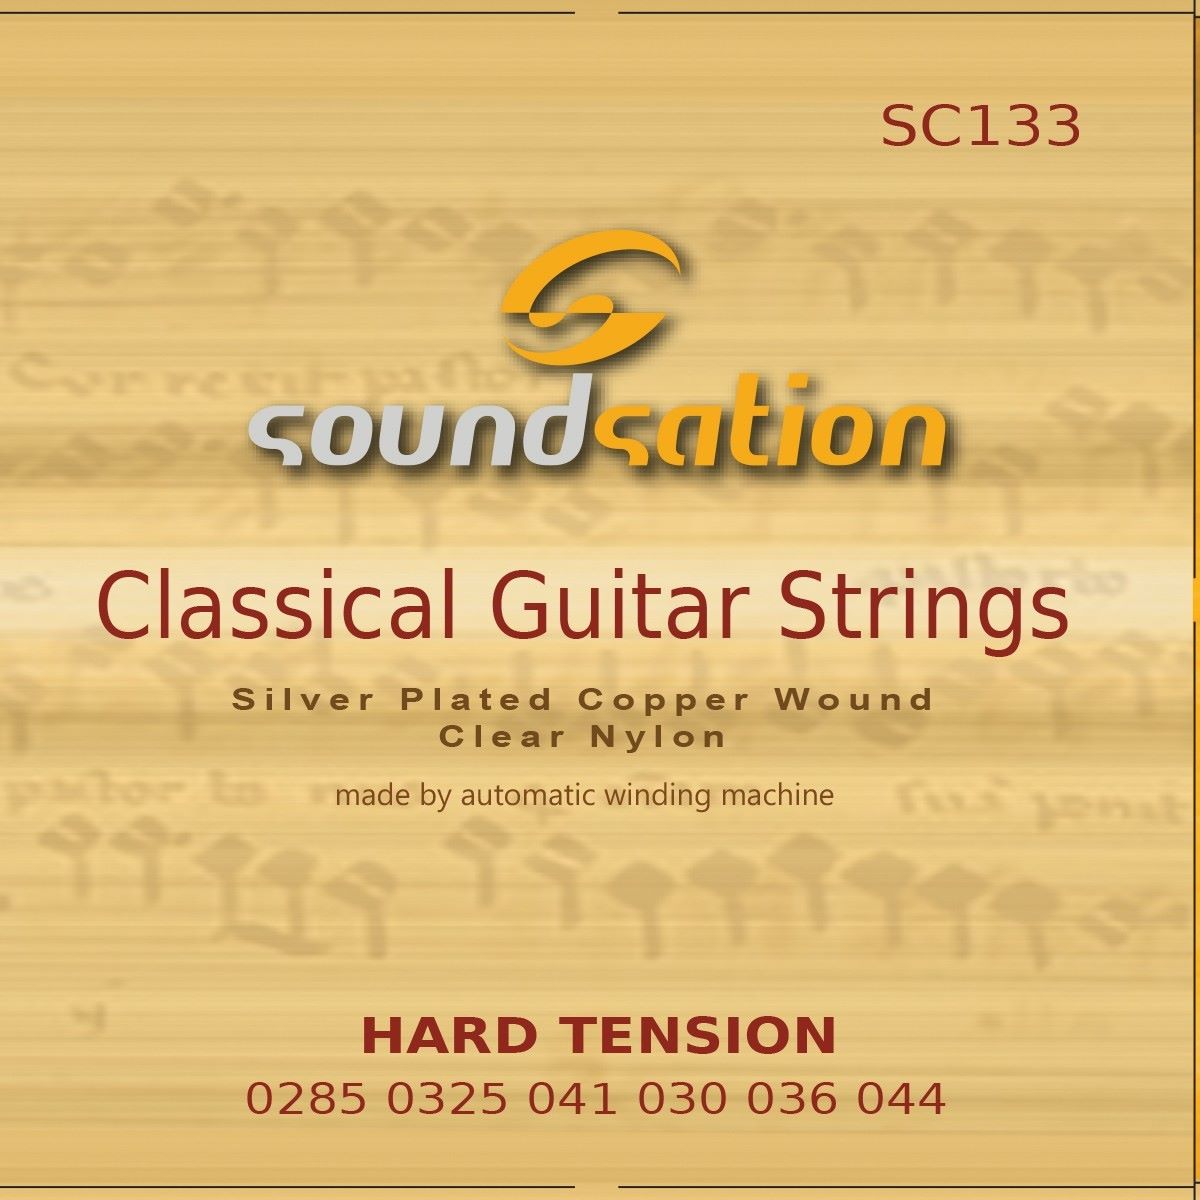 Soundsation SC133